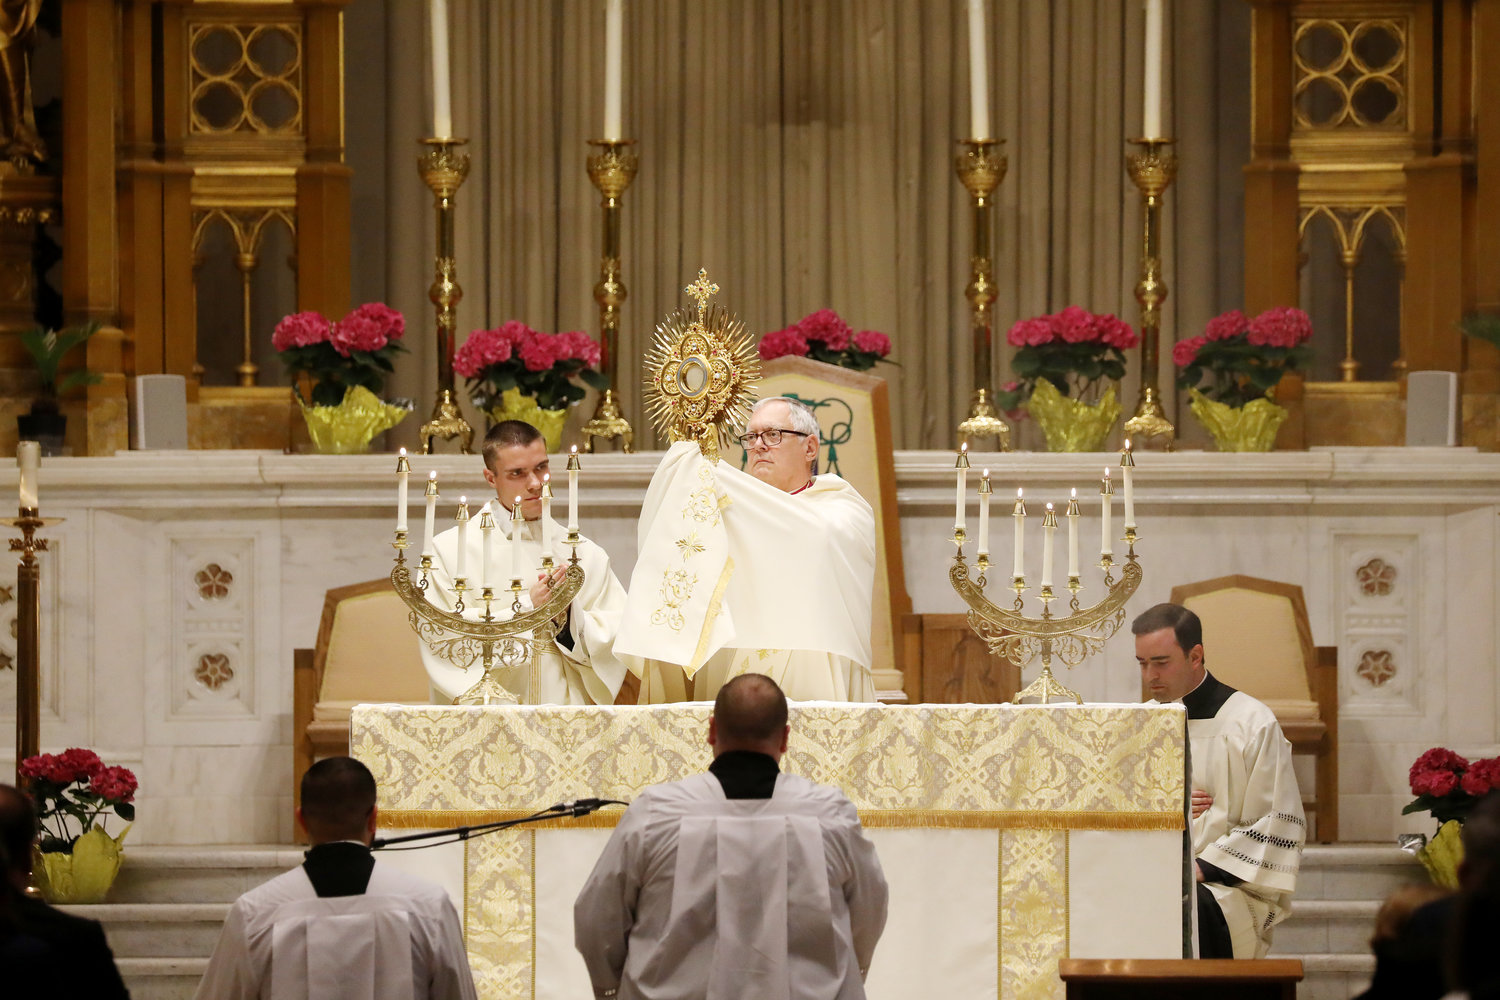 Bishop Thomas J. Tobin led the faithful in prayer before the Blessed Sacrament prior to Cardinal Dolan’s presentation.